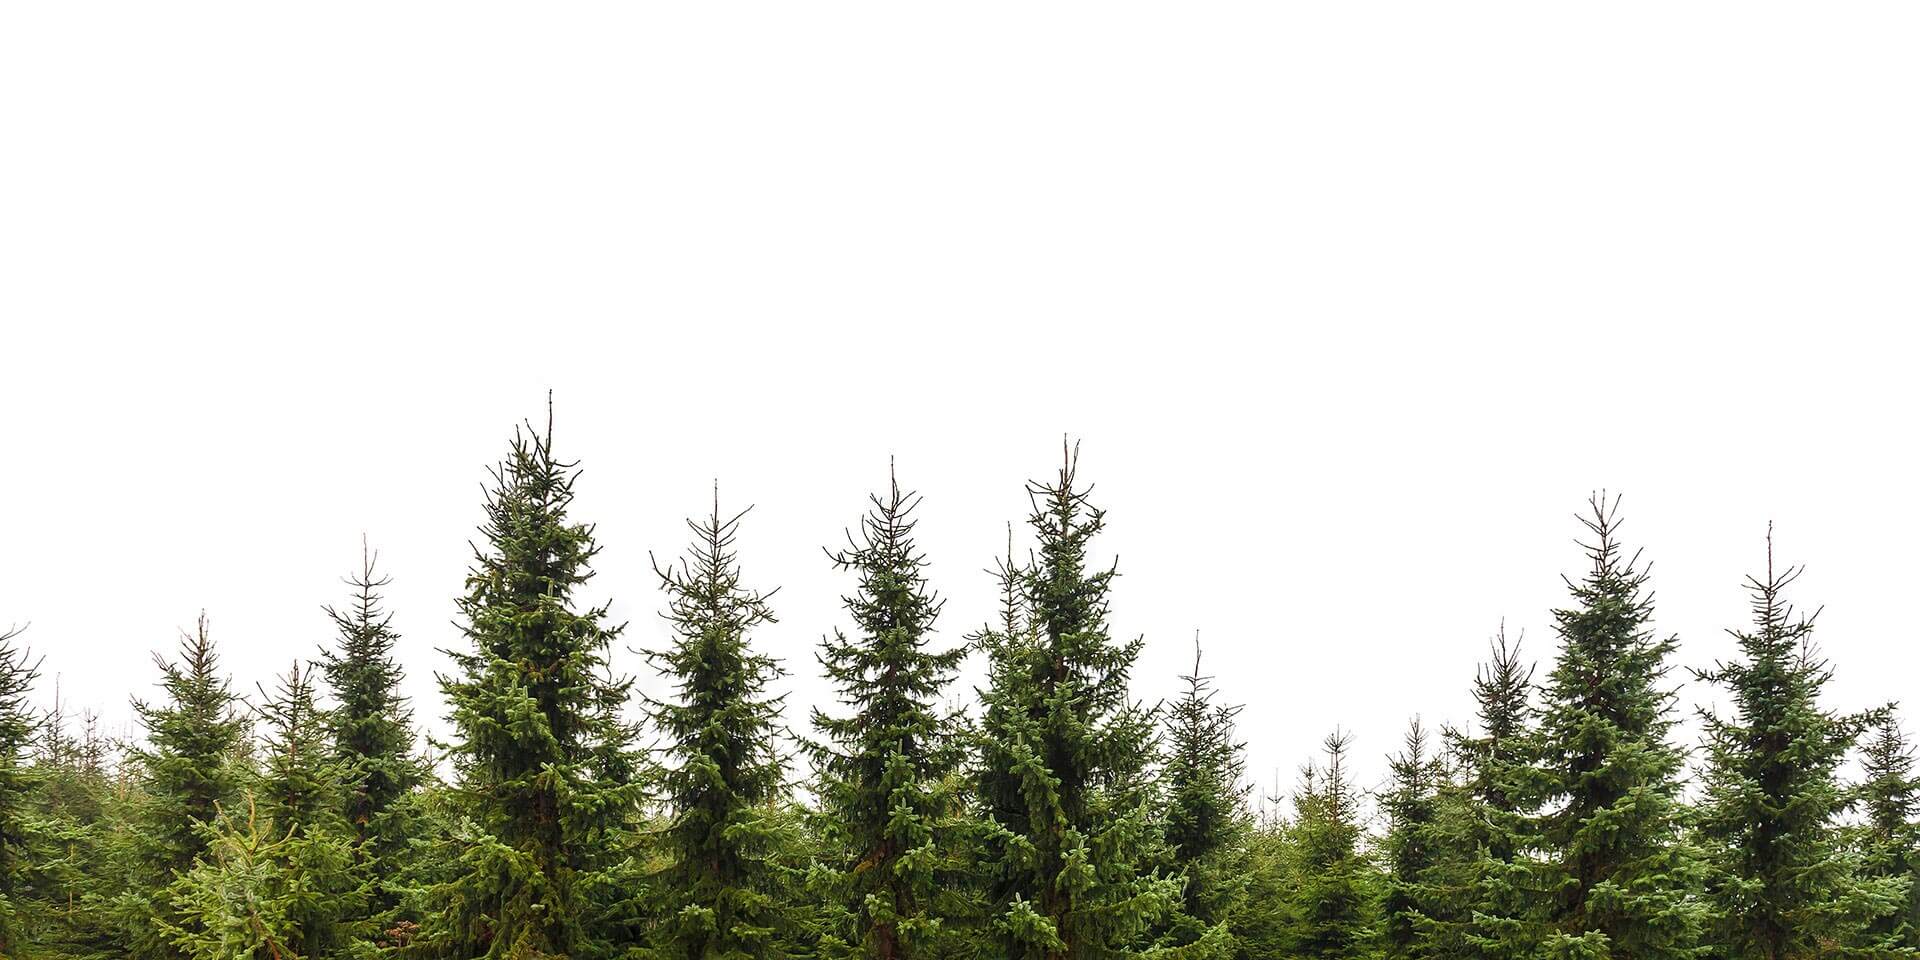 pine tree removal